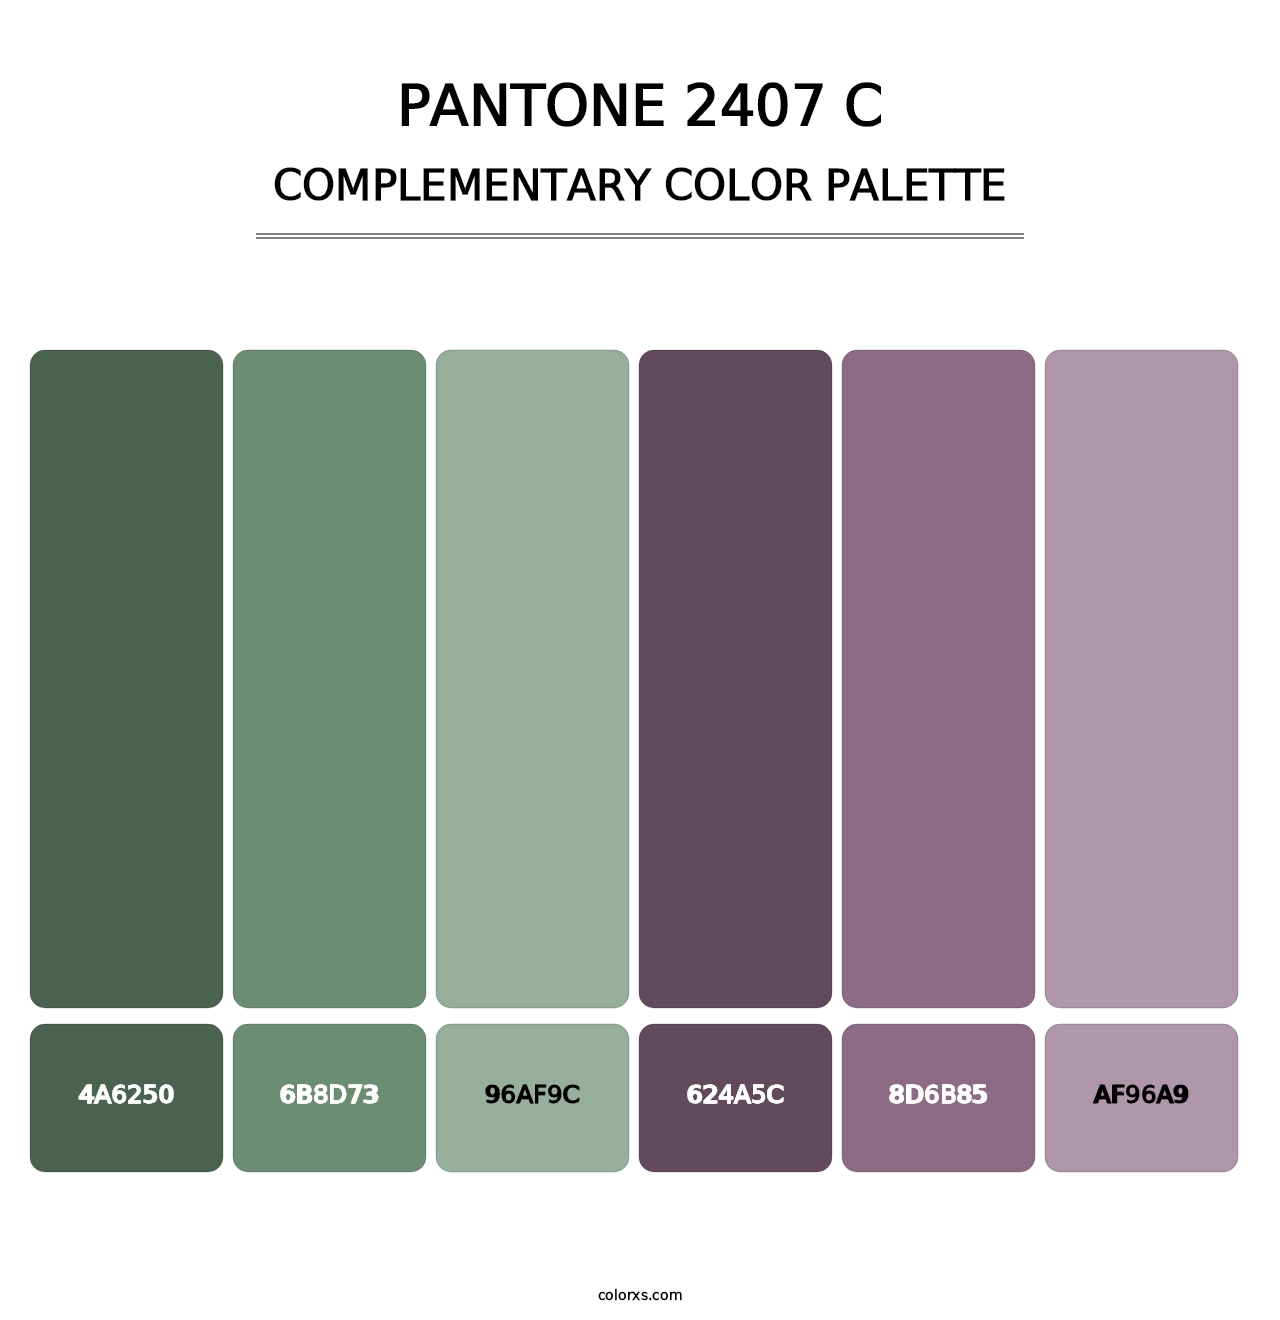 PANTONE 2407 C - Complementary Color Palette